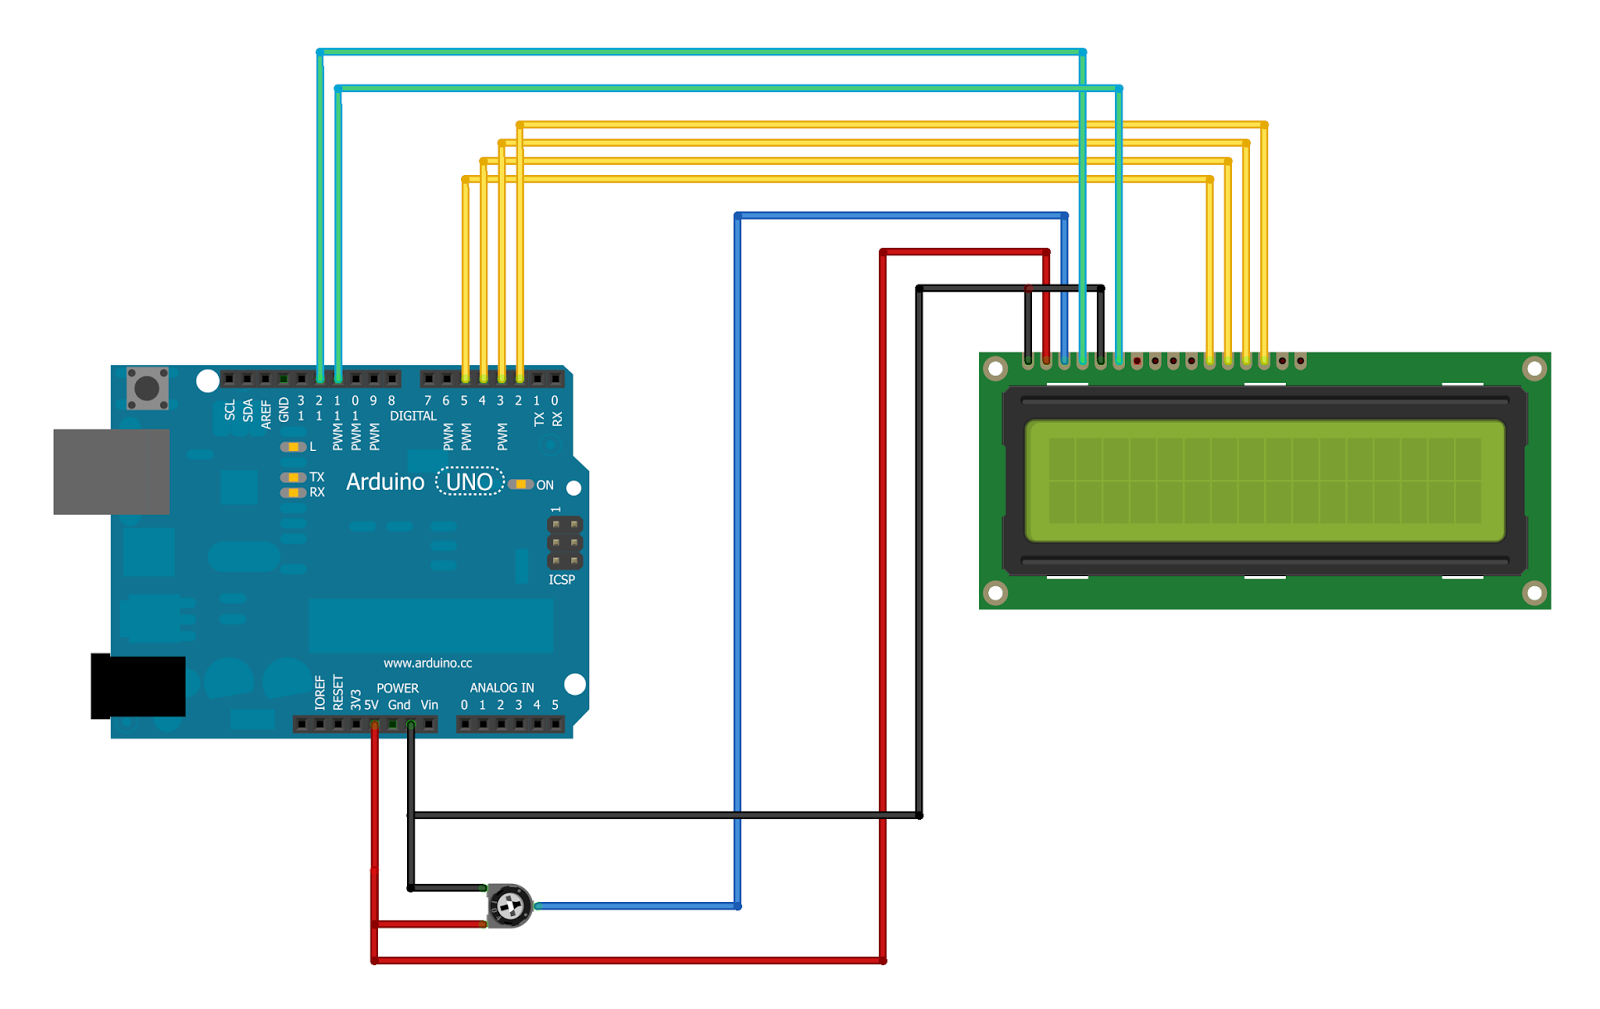 Namasudra: Wiring a 16x2 LCD display with Arduino